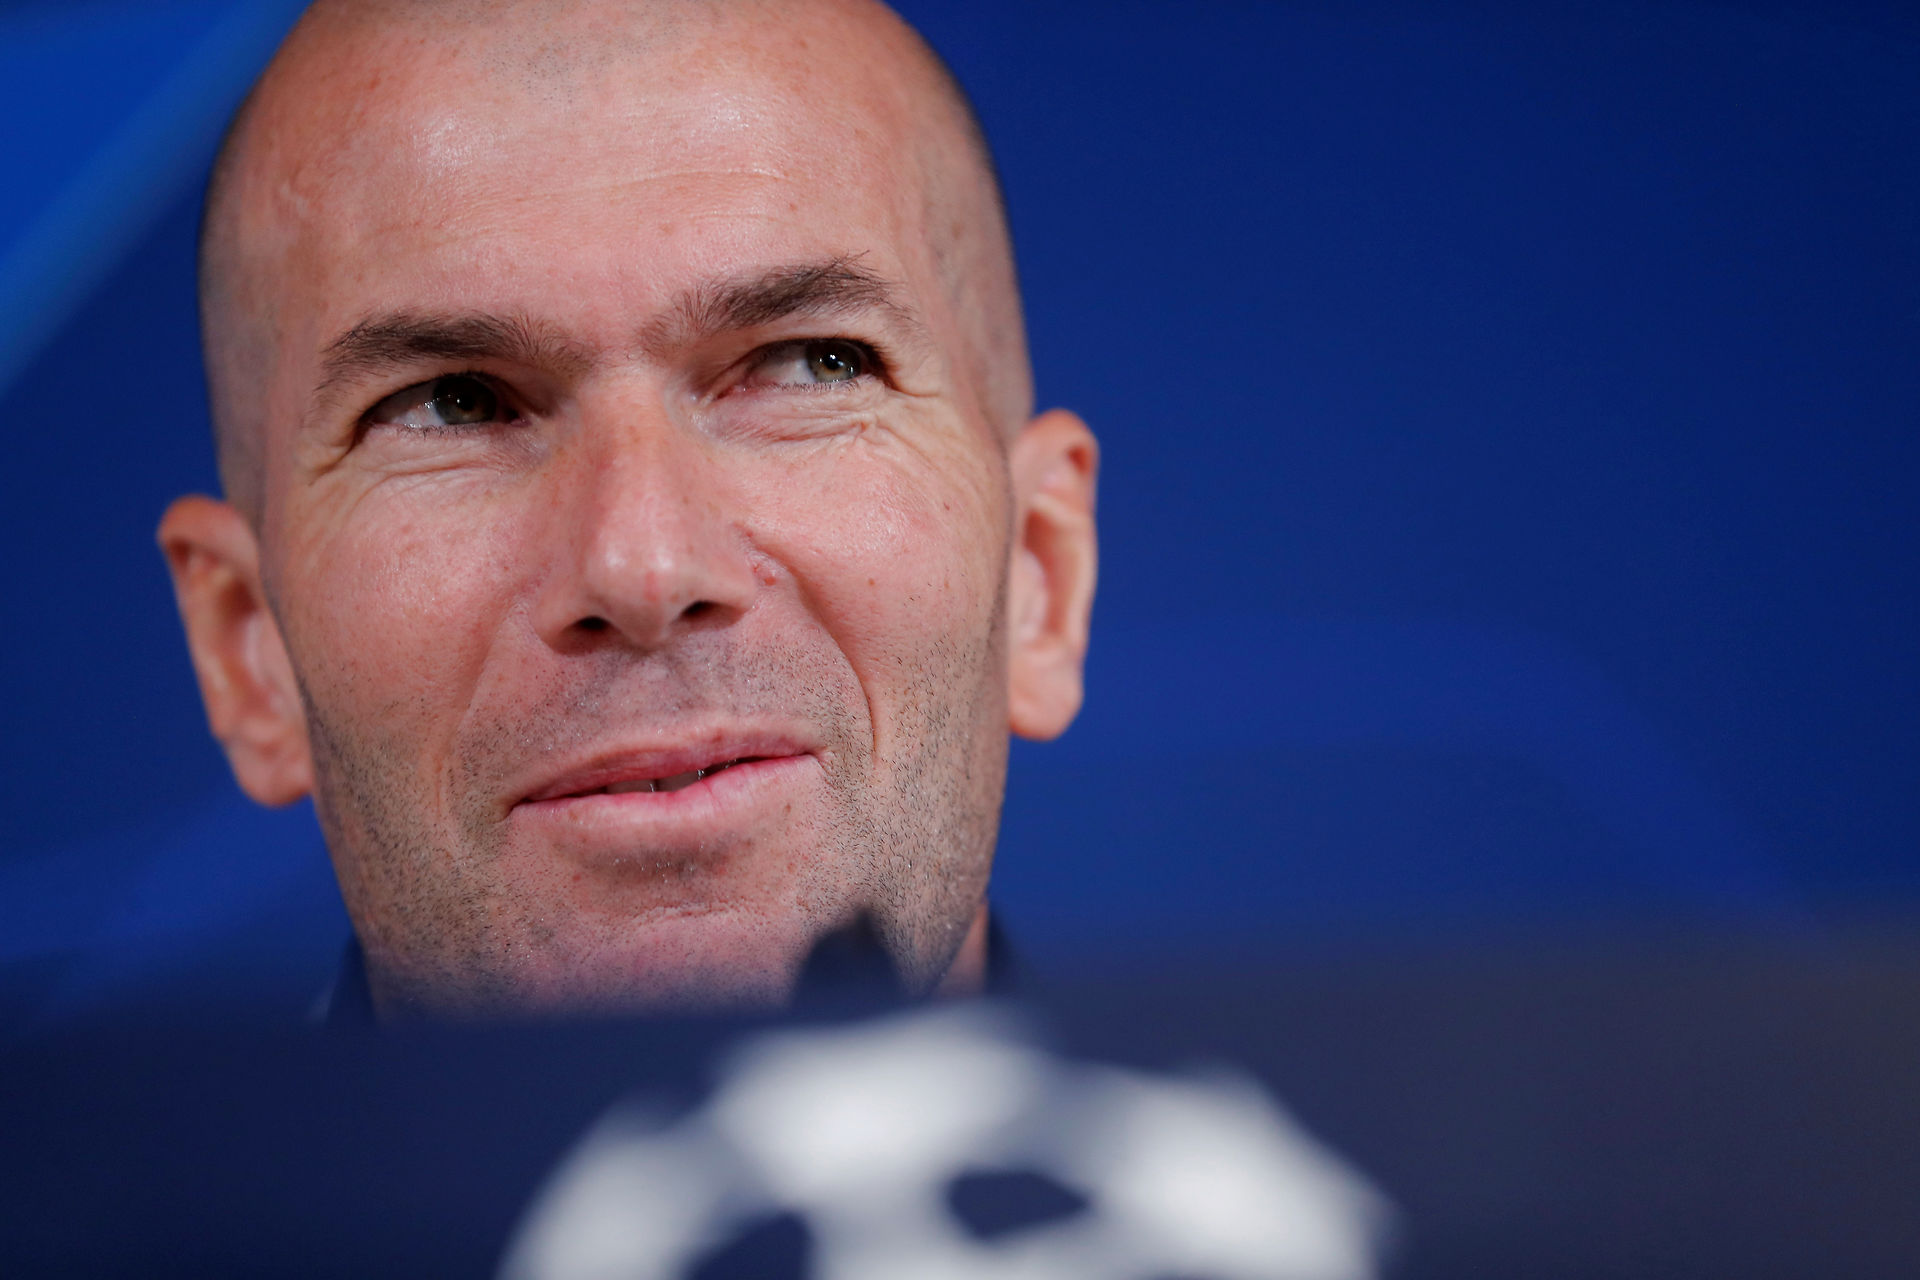 Реферат: Zinedine Zidane